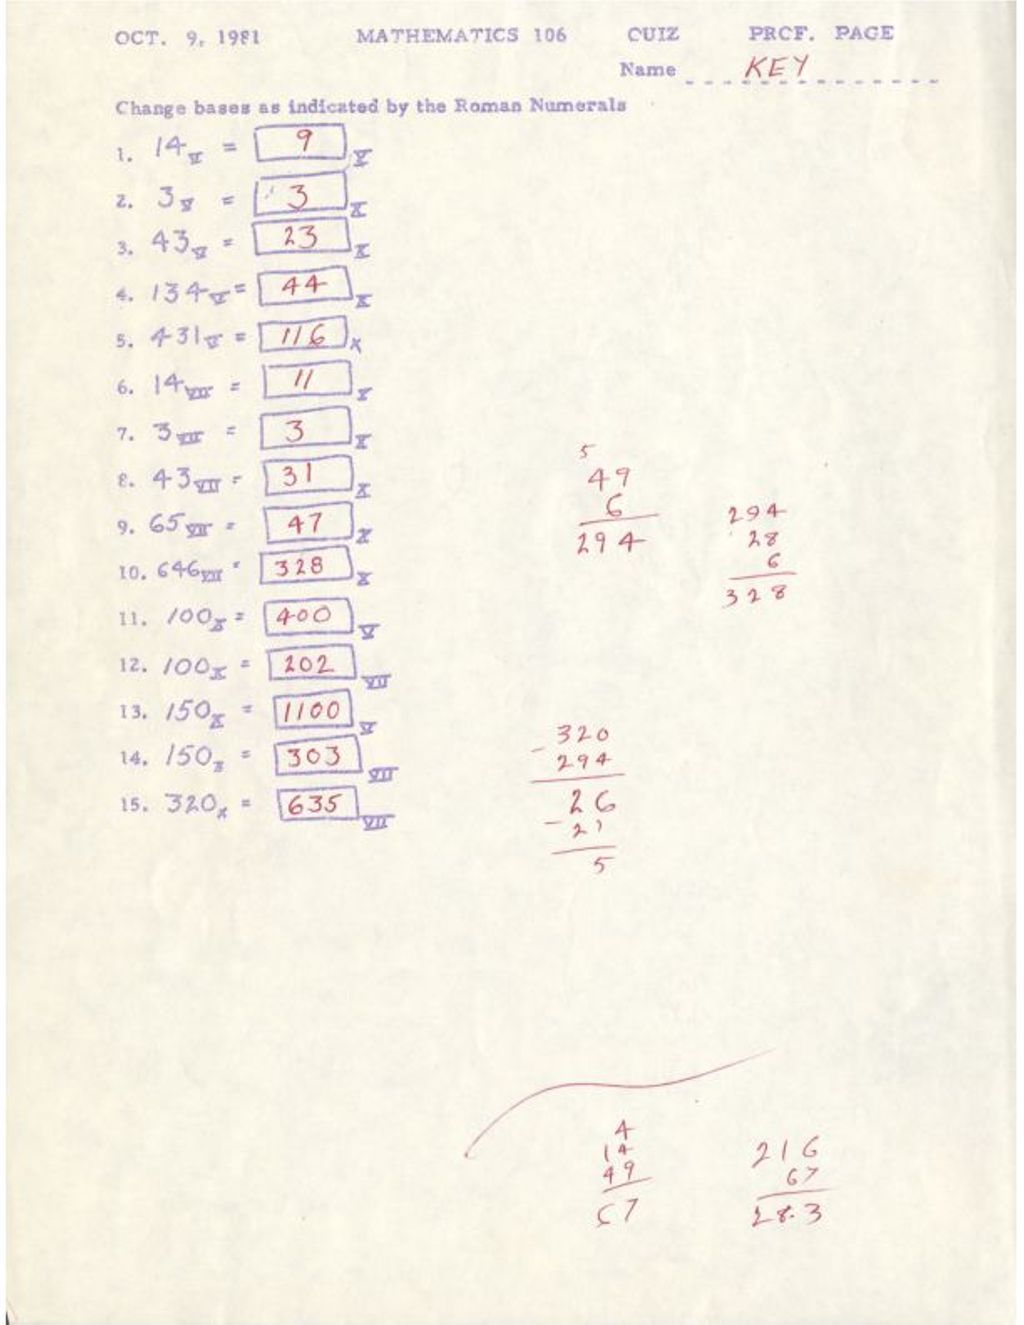 Mathematics 106 Quiz Oct. 9, 1981 w/ AK(base)